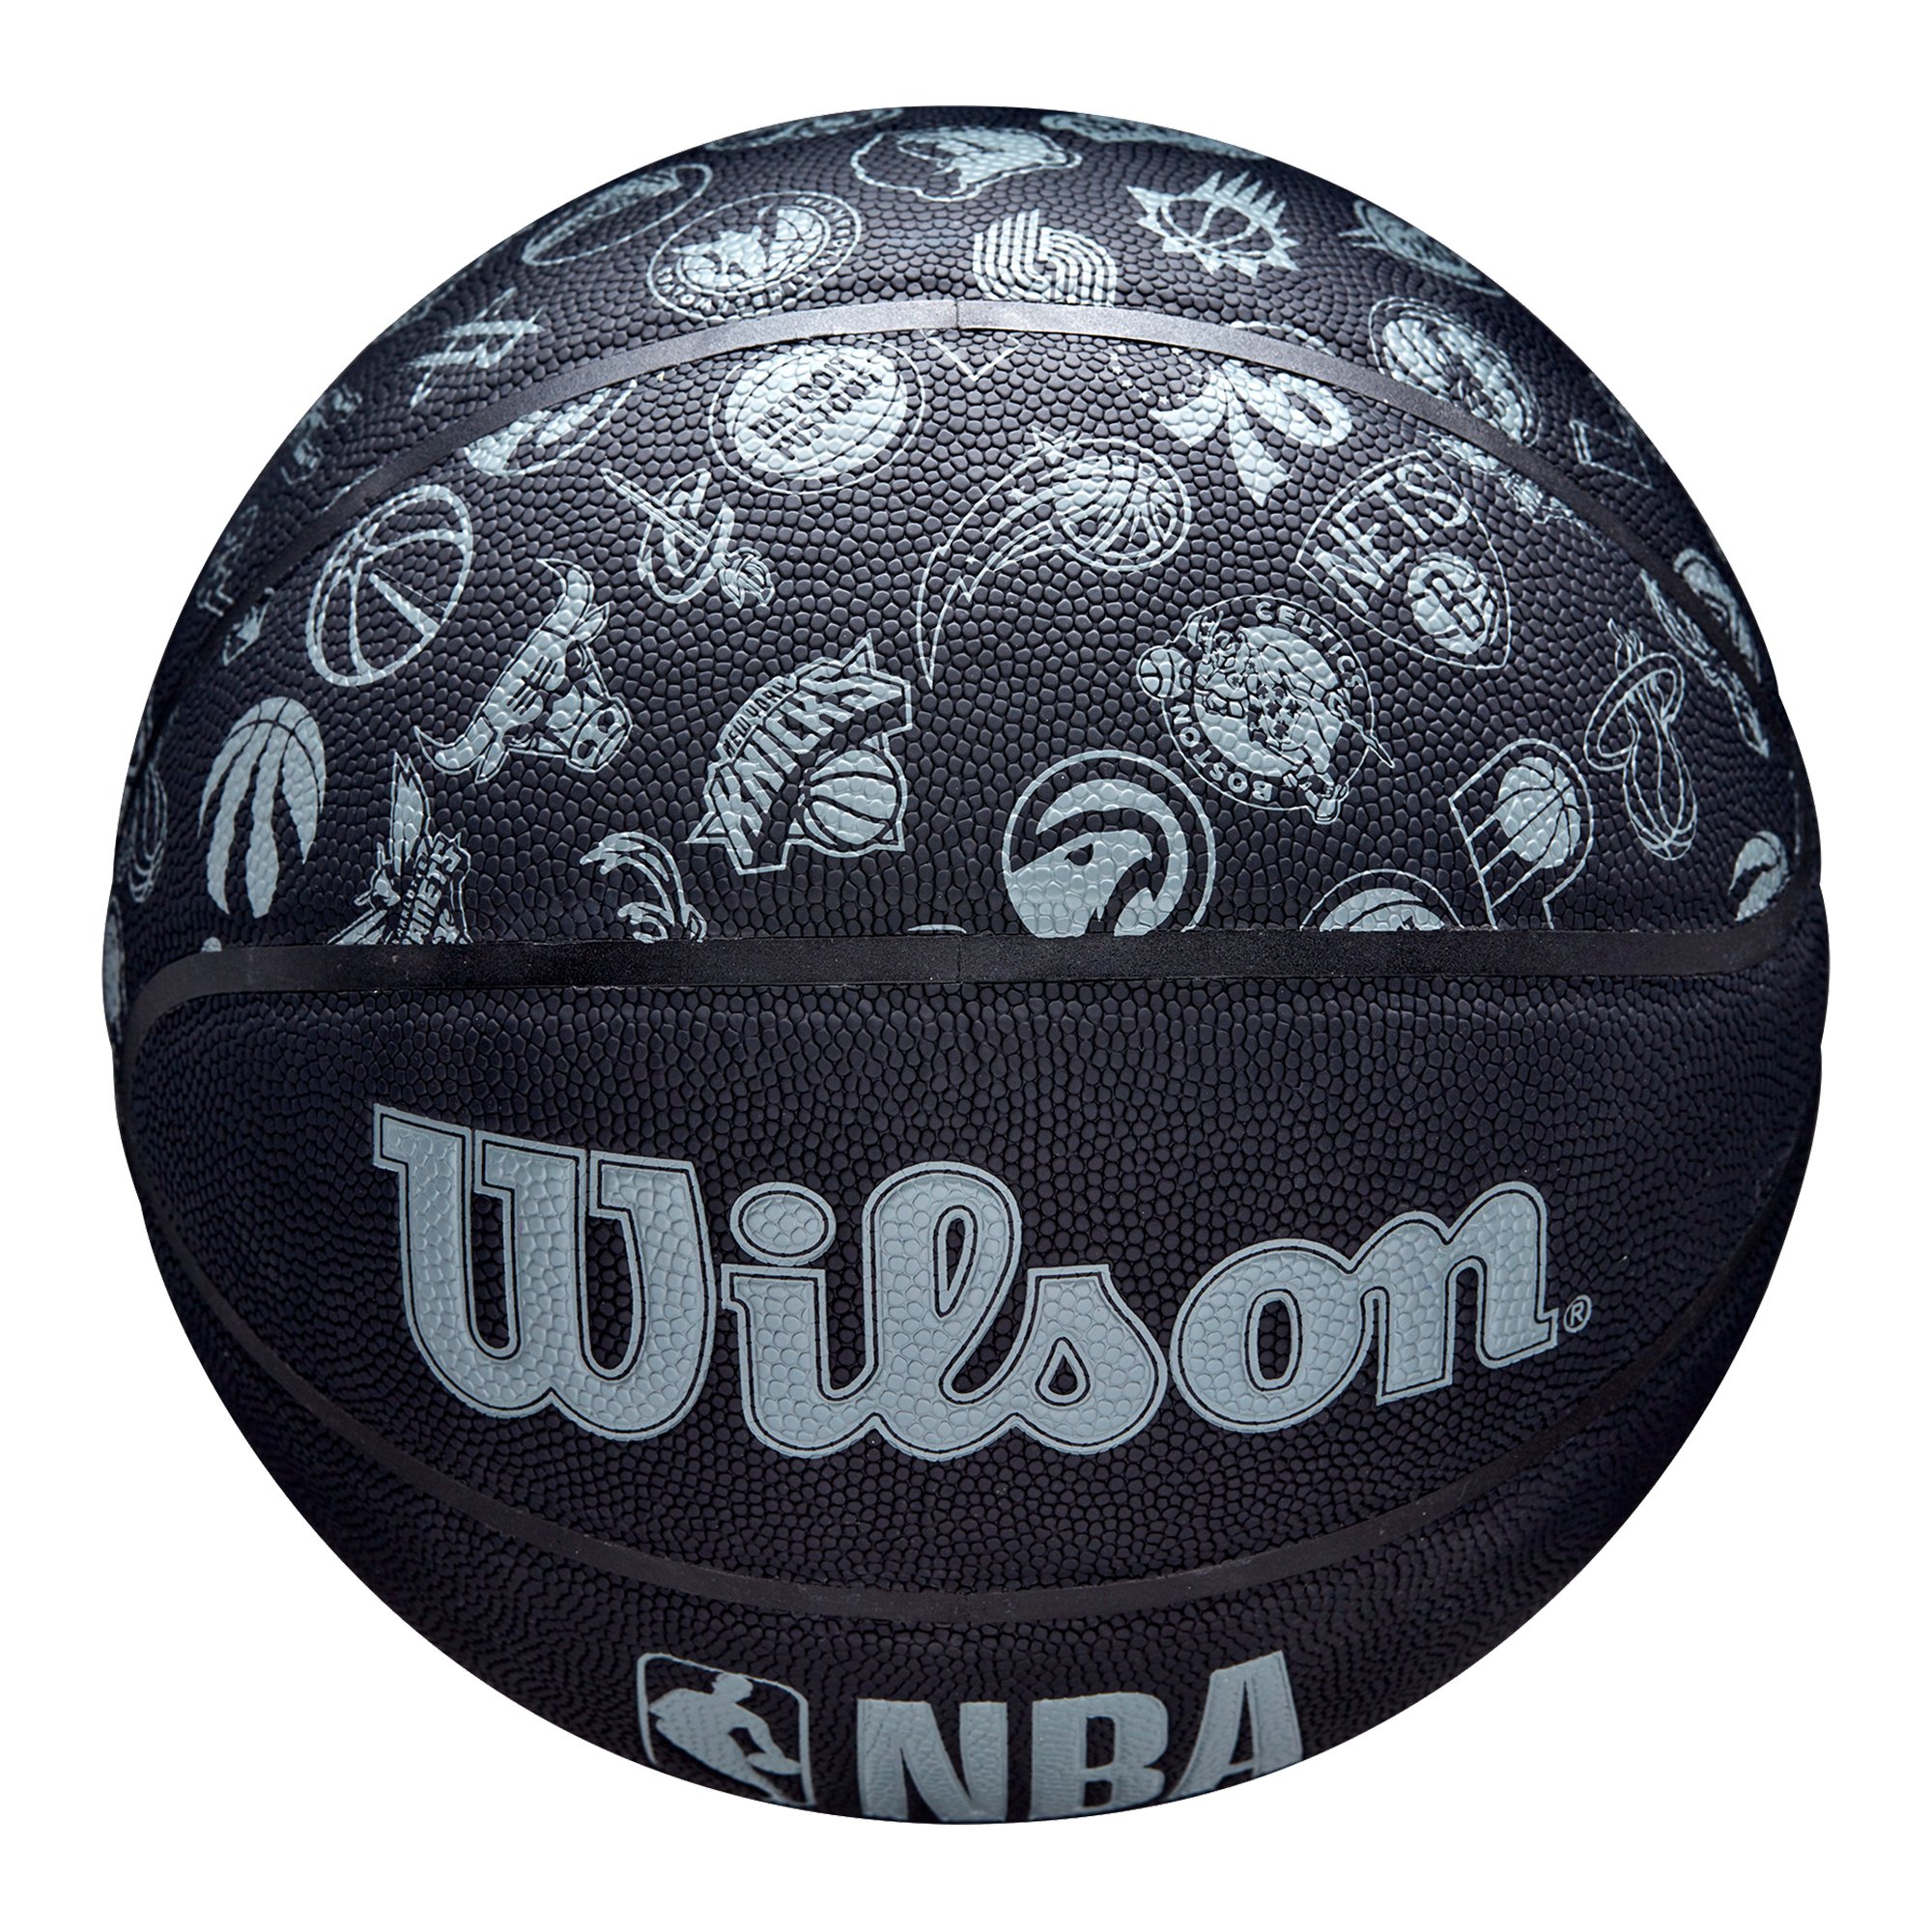 Wilson NBA All Team Basketball Black